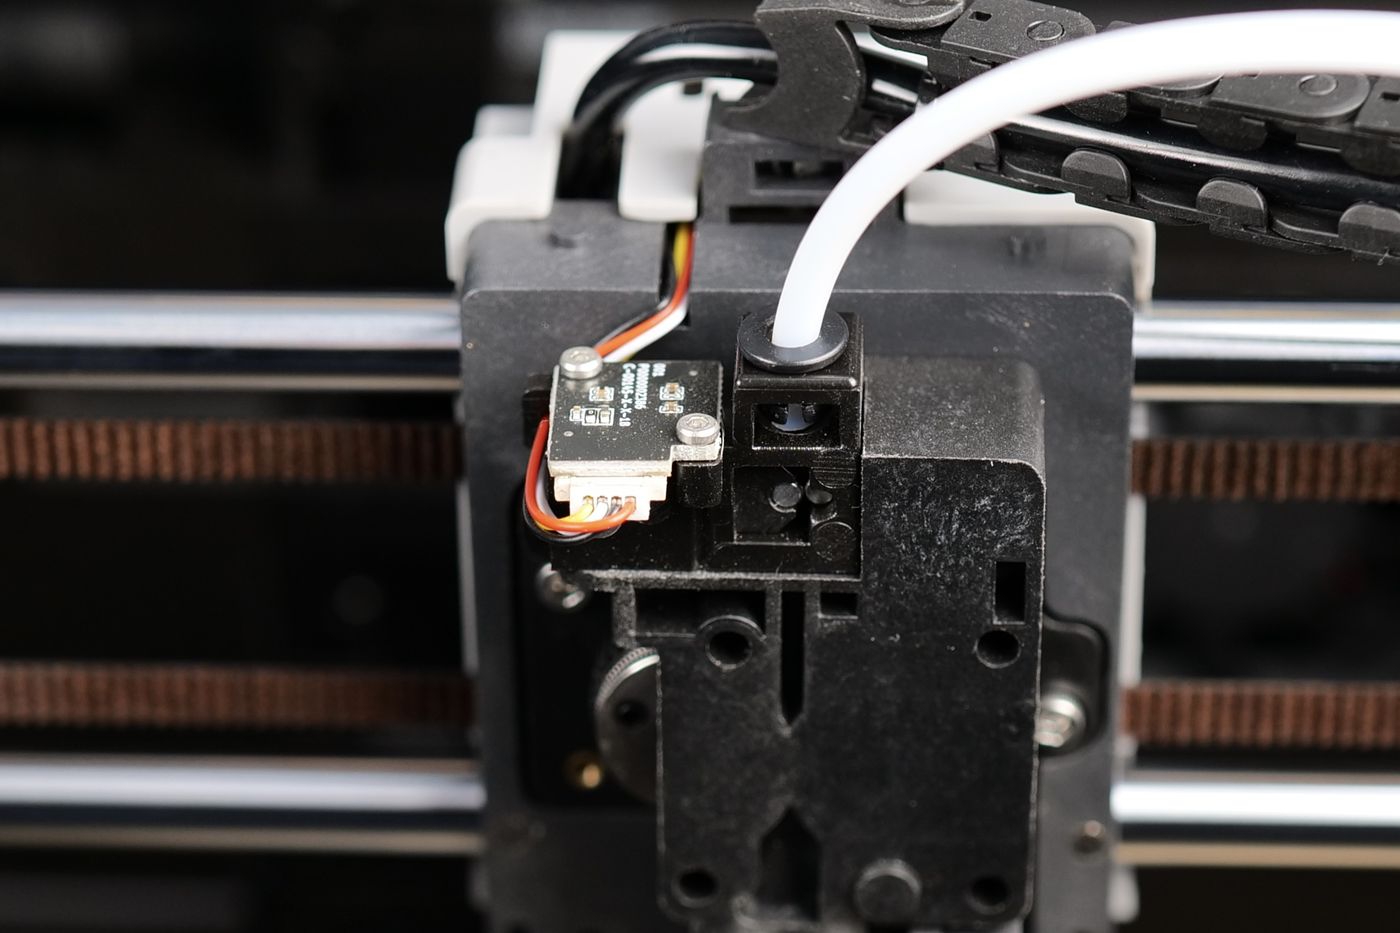 Filament Detection on Q1 Pro2 | QIDI Q1 Pro Review: New Printer, New Problems